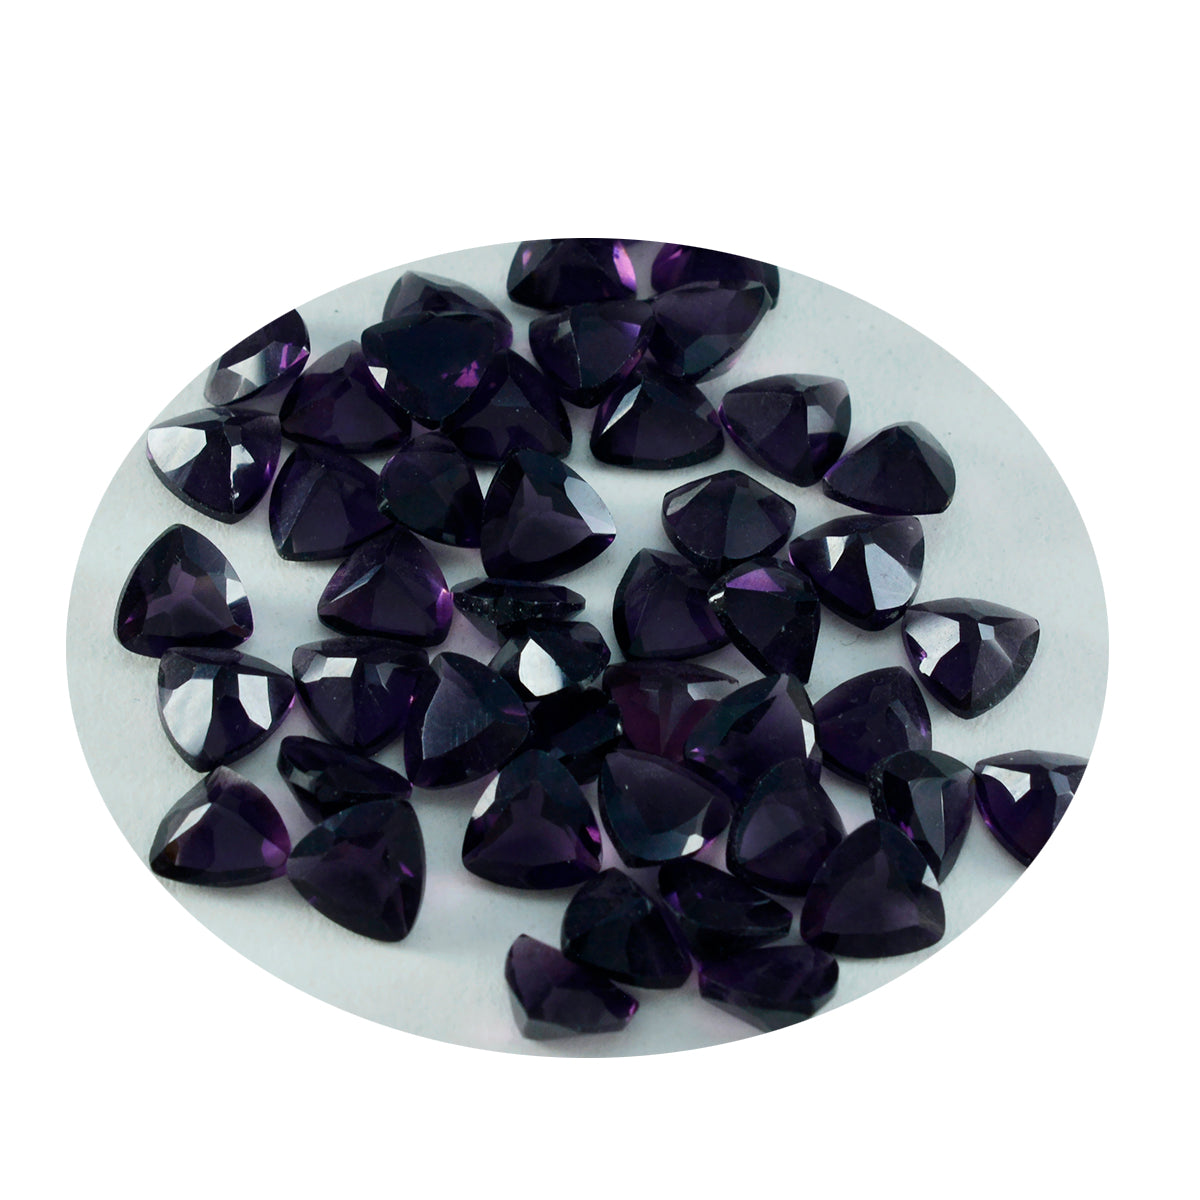 Riyogems 1PC Purple Amethyst CZ Faceted 6x6 mm Trillion Shape Good Quality Loose Gems